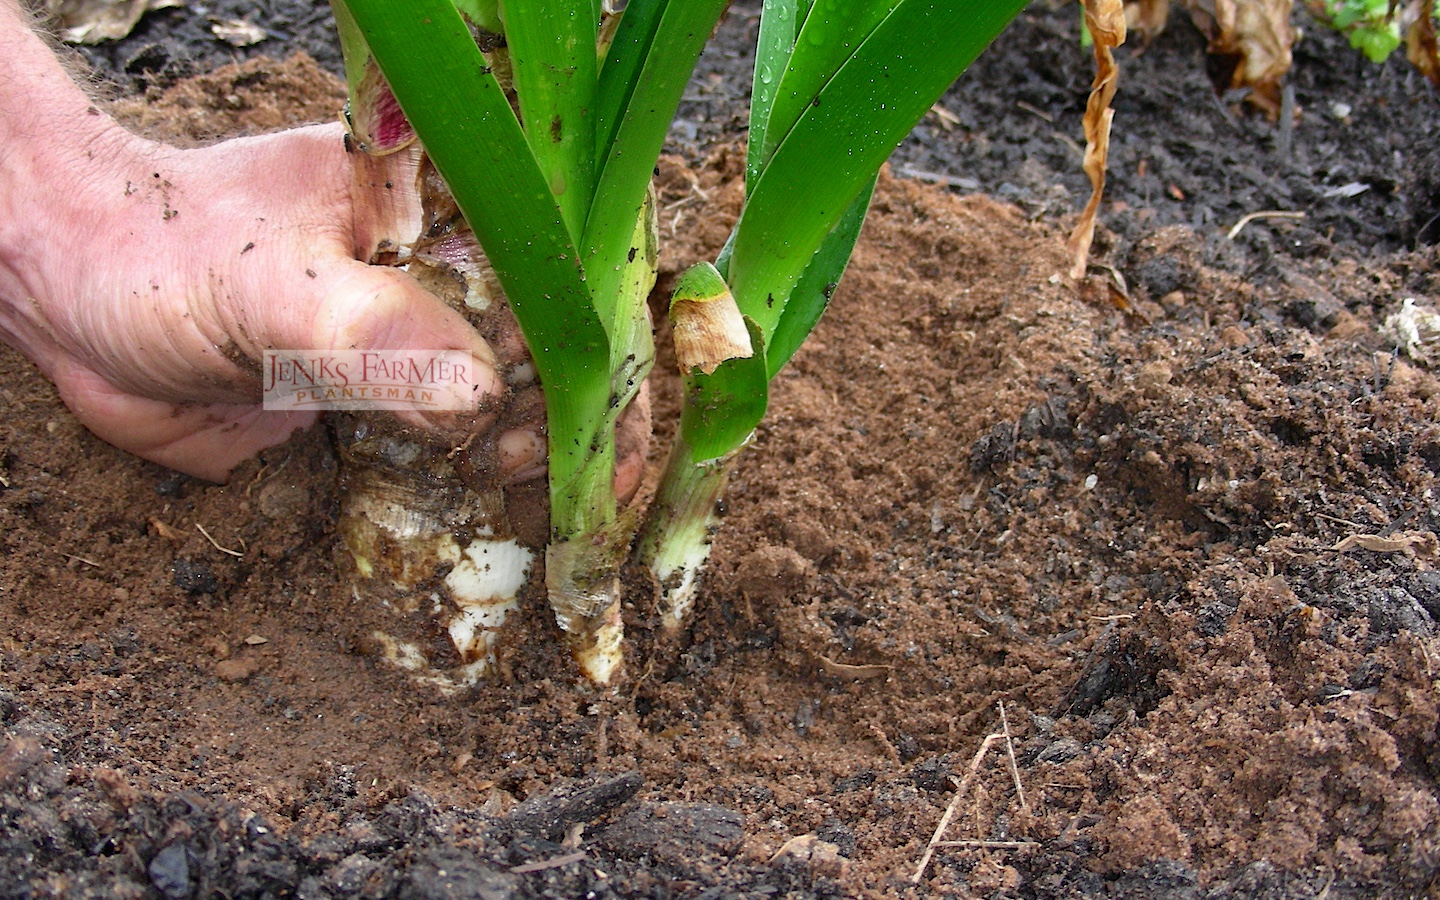 How to Plant A Crinum Lily Bulb Jenks Farmer